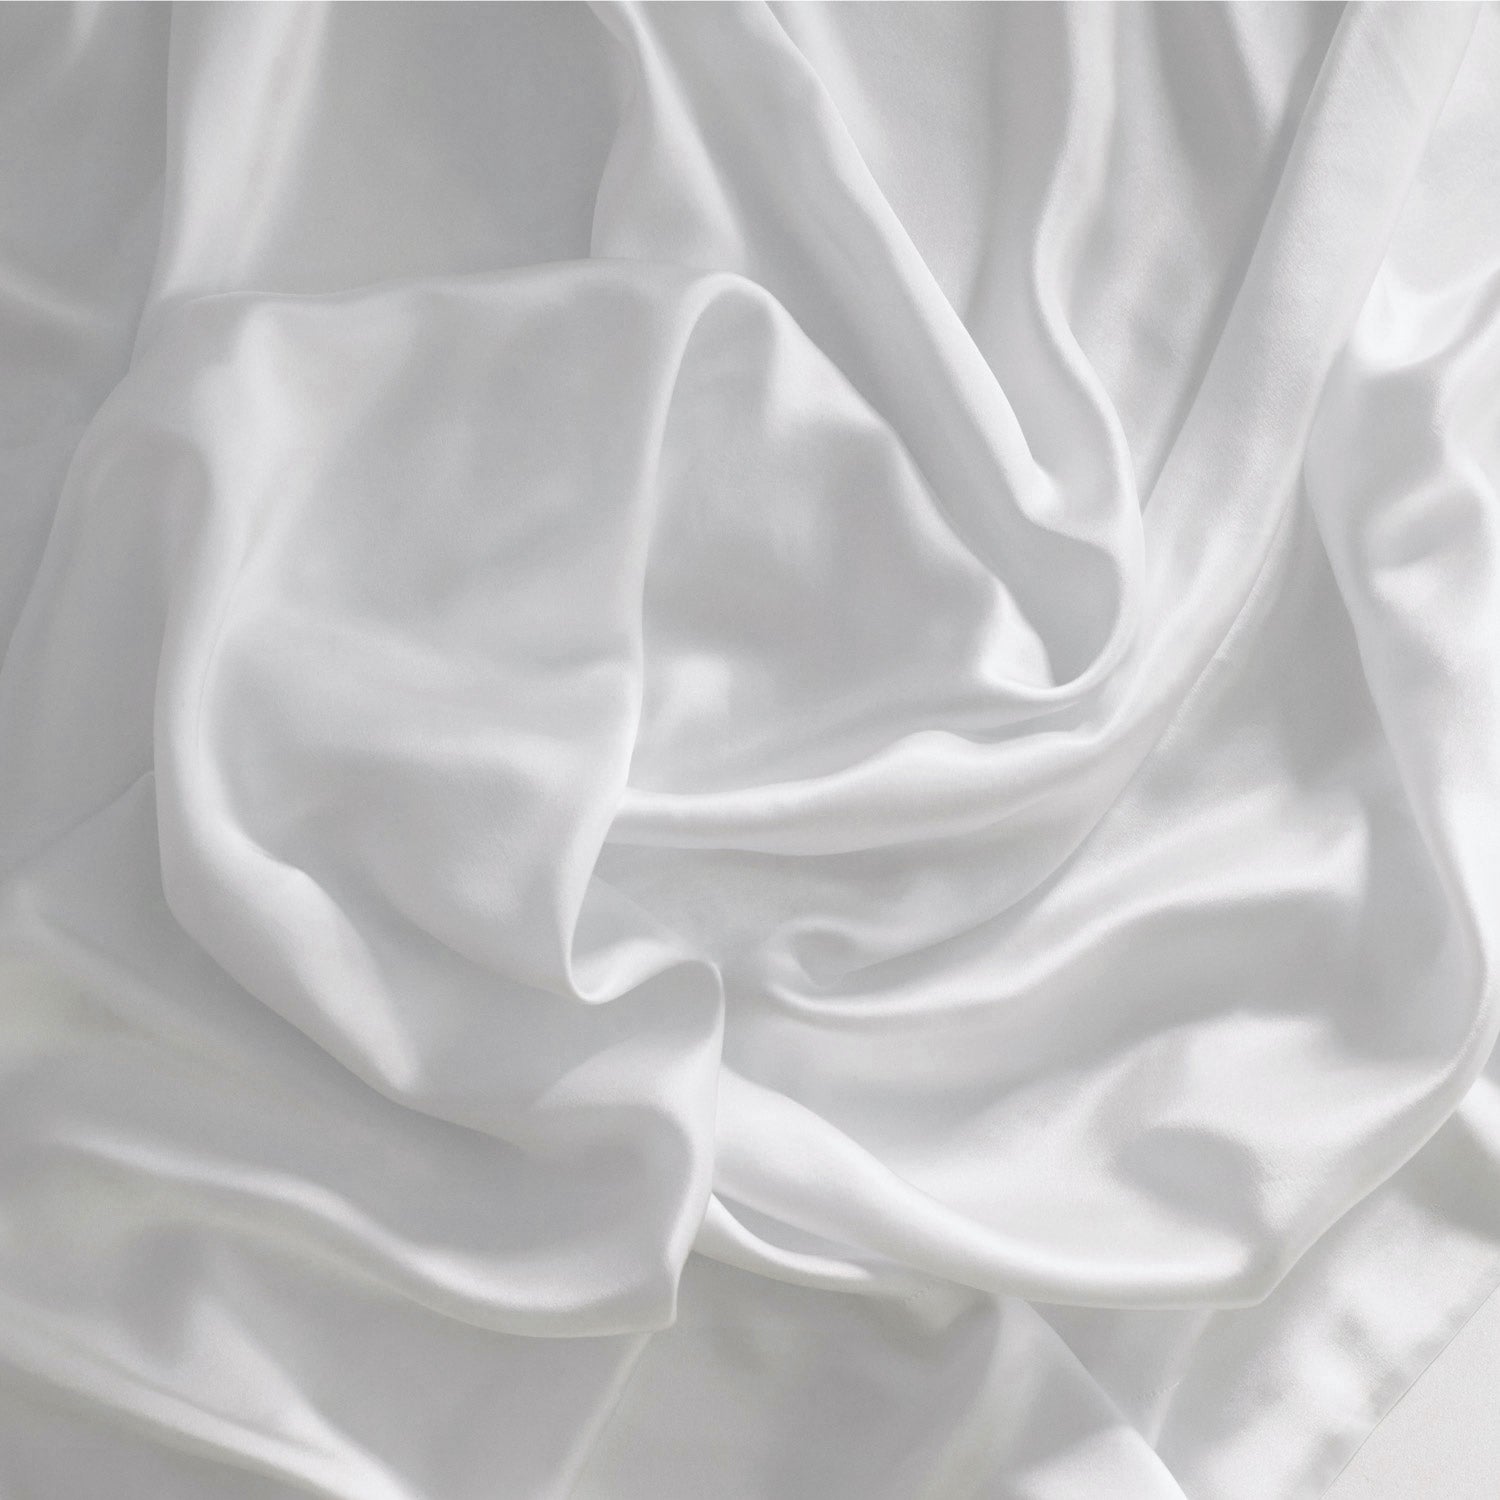 Inkjet Fabric Sheets - Washable Silk